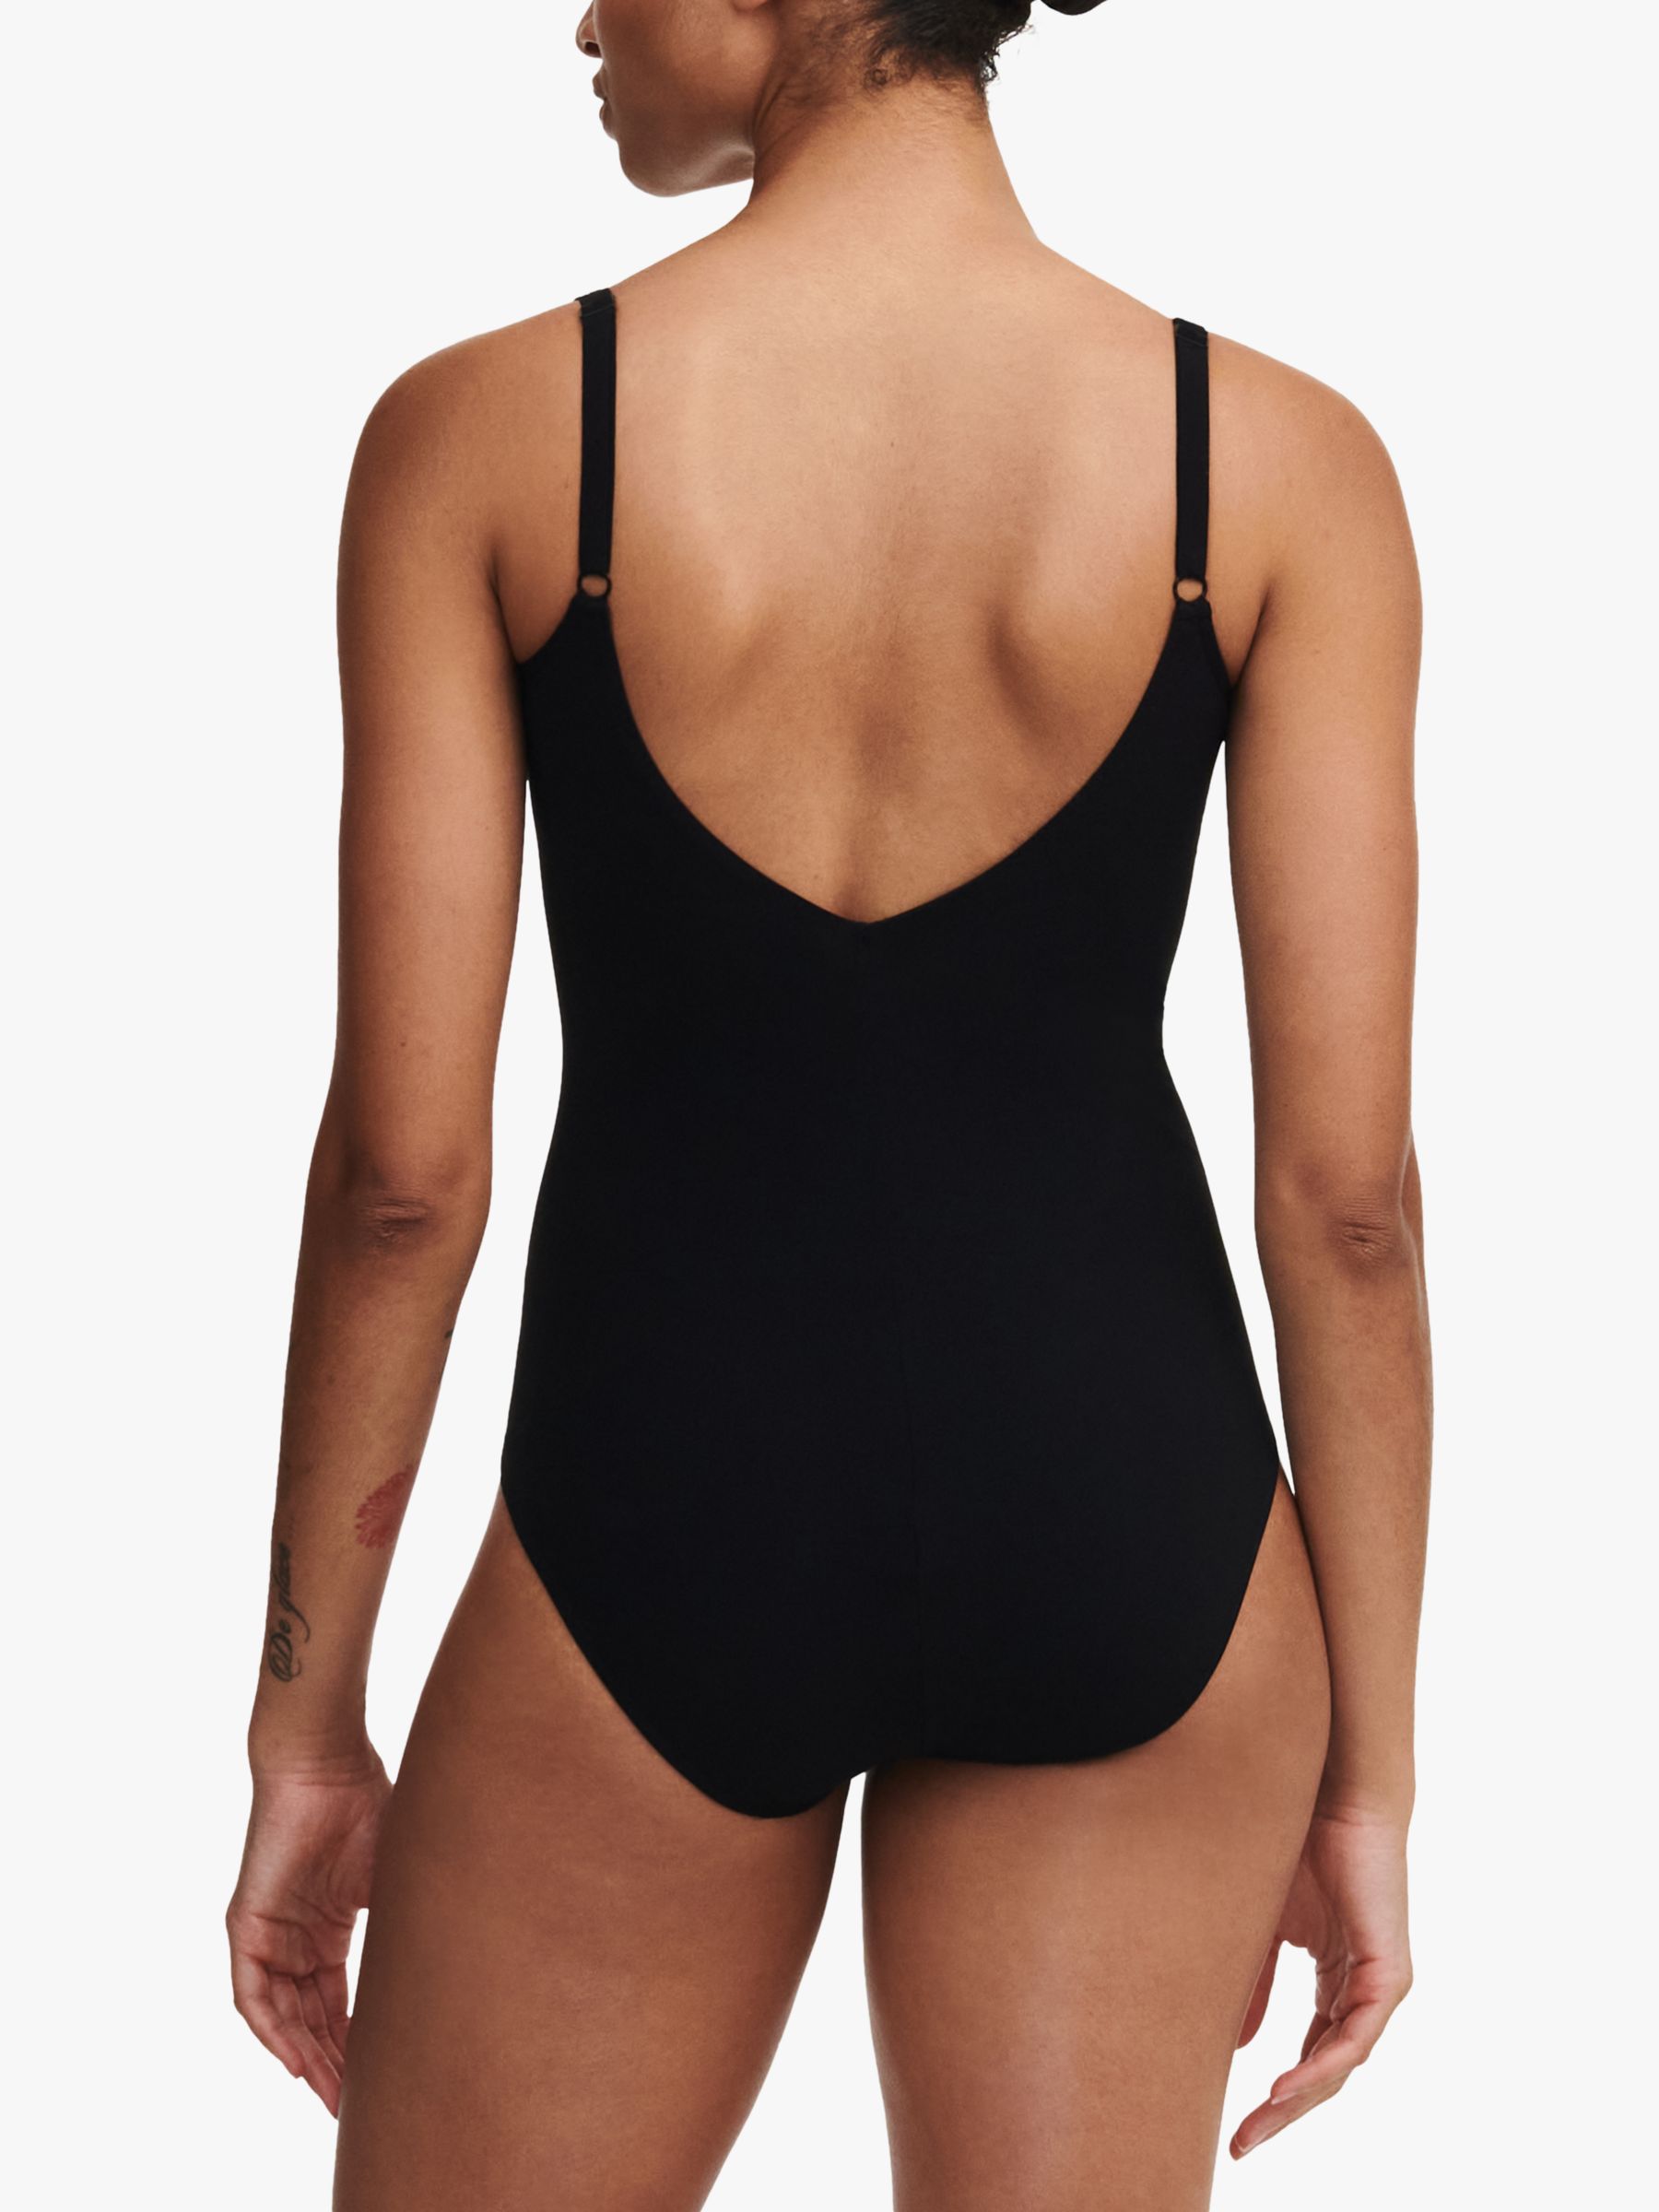 Chantelle Emblem Underwired Swimsuit, Black, 38DD